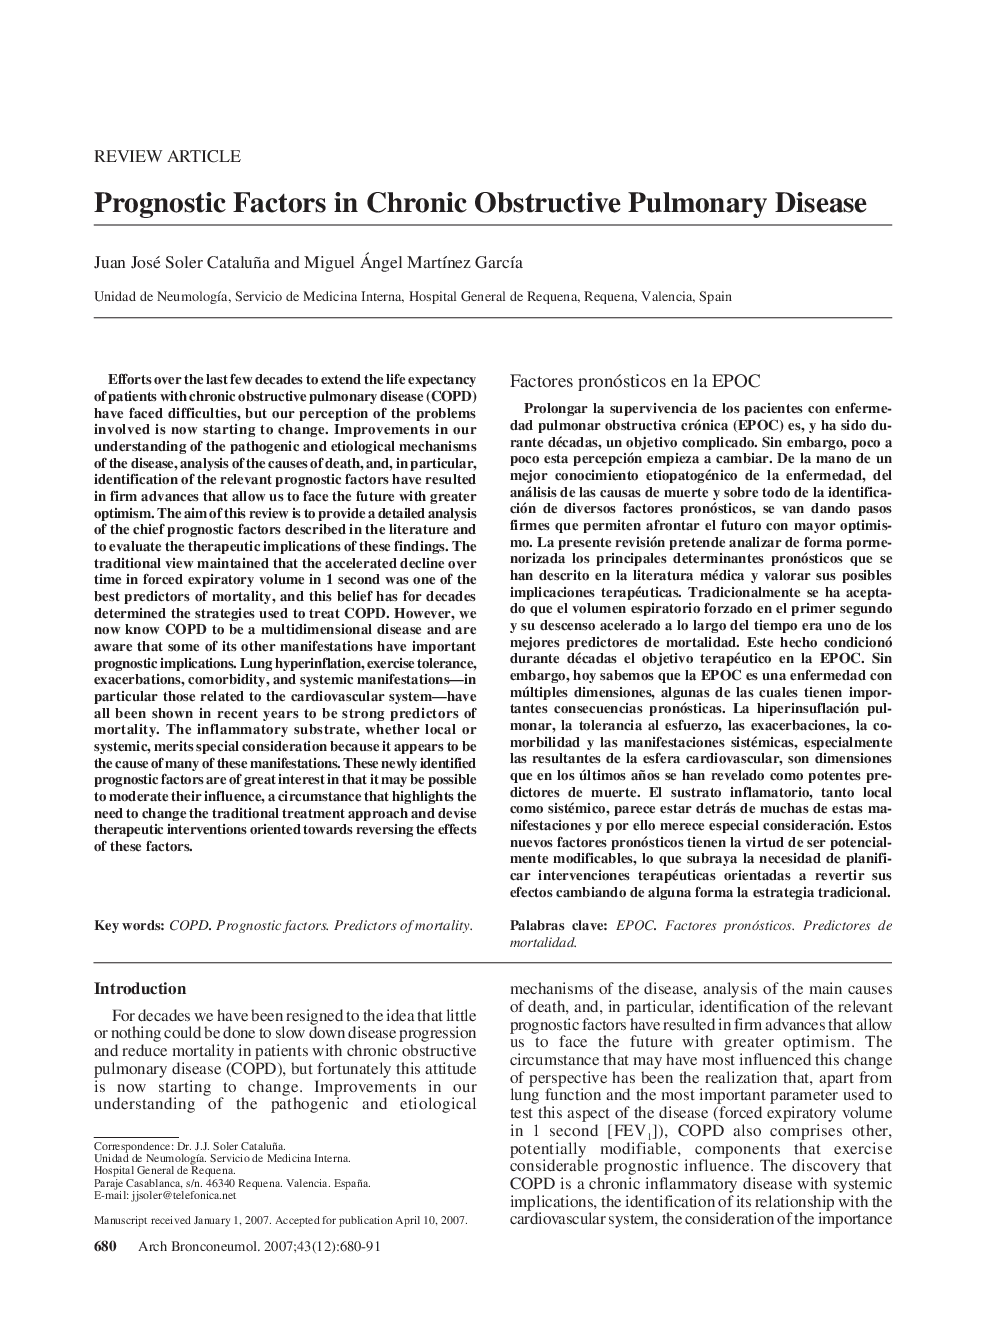 Prognostic Factors in Chronic Obstructive Pulmonary Disease